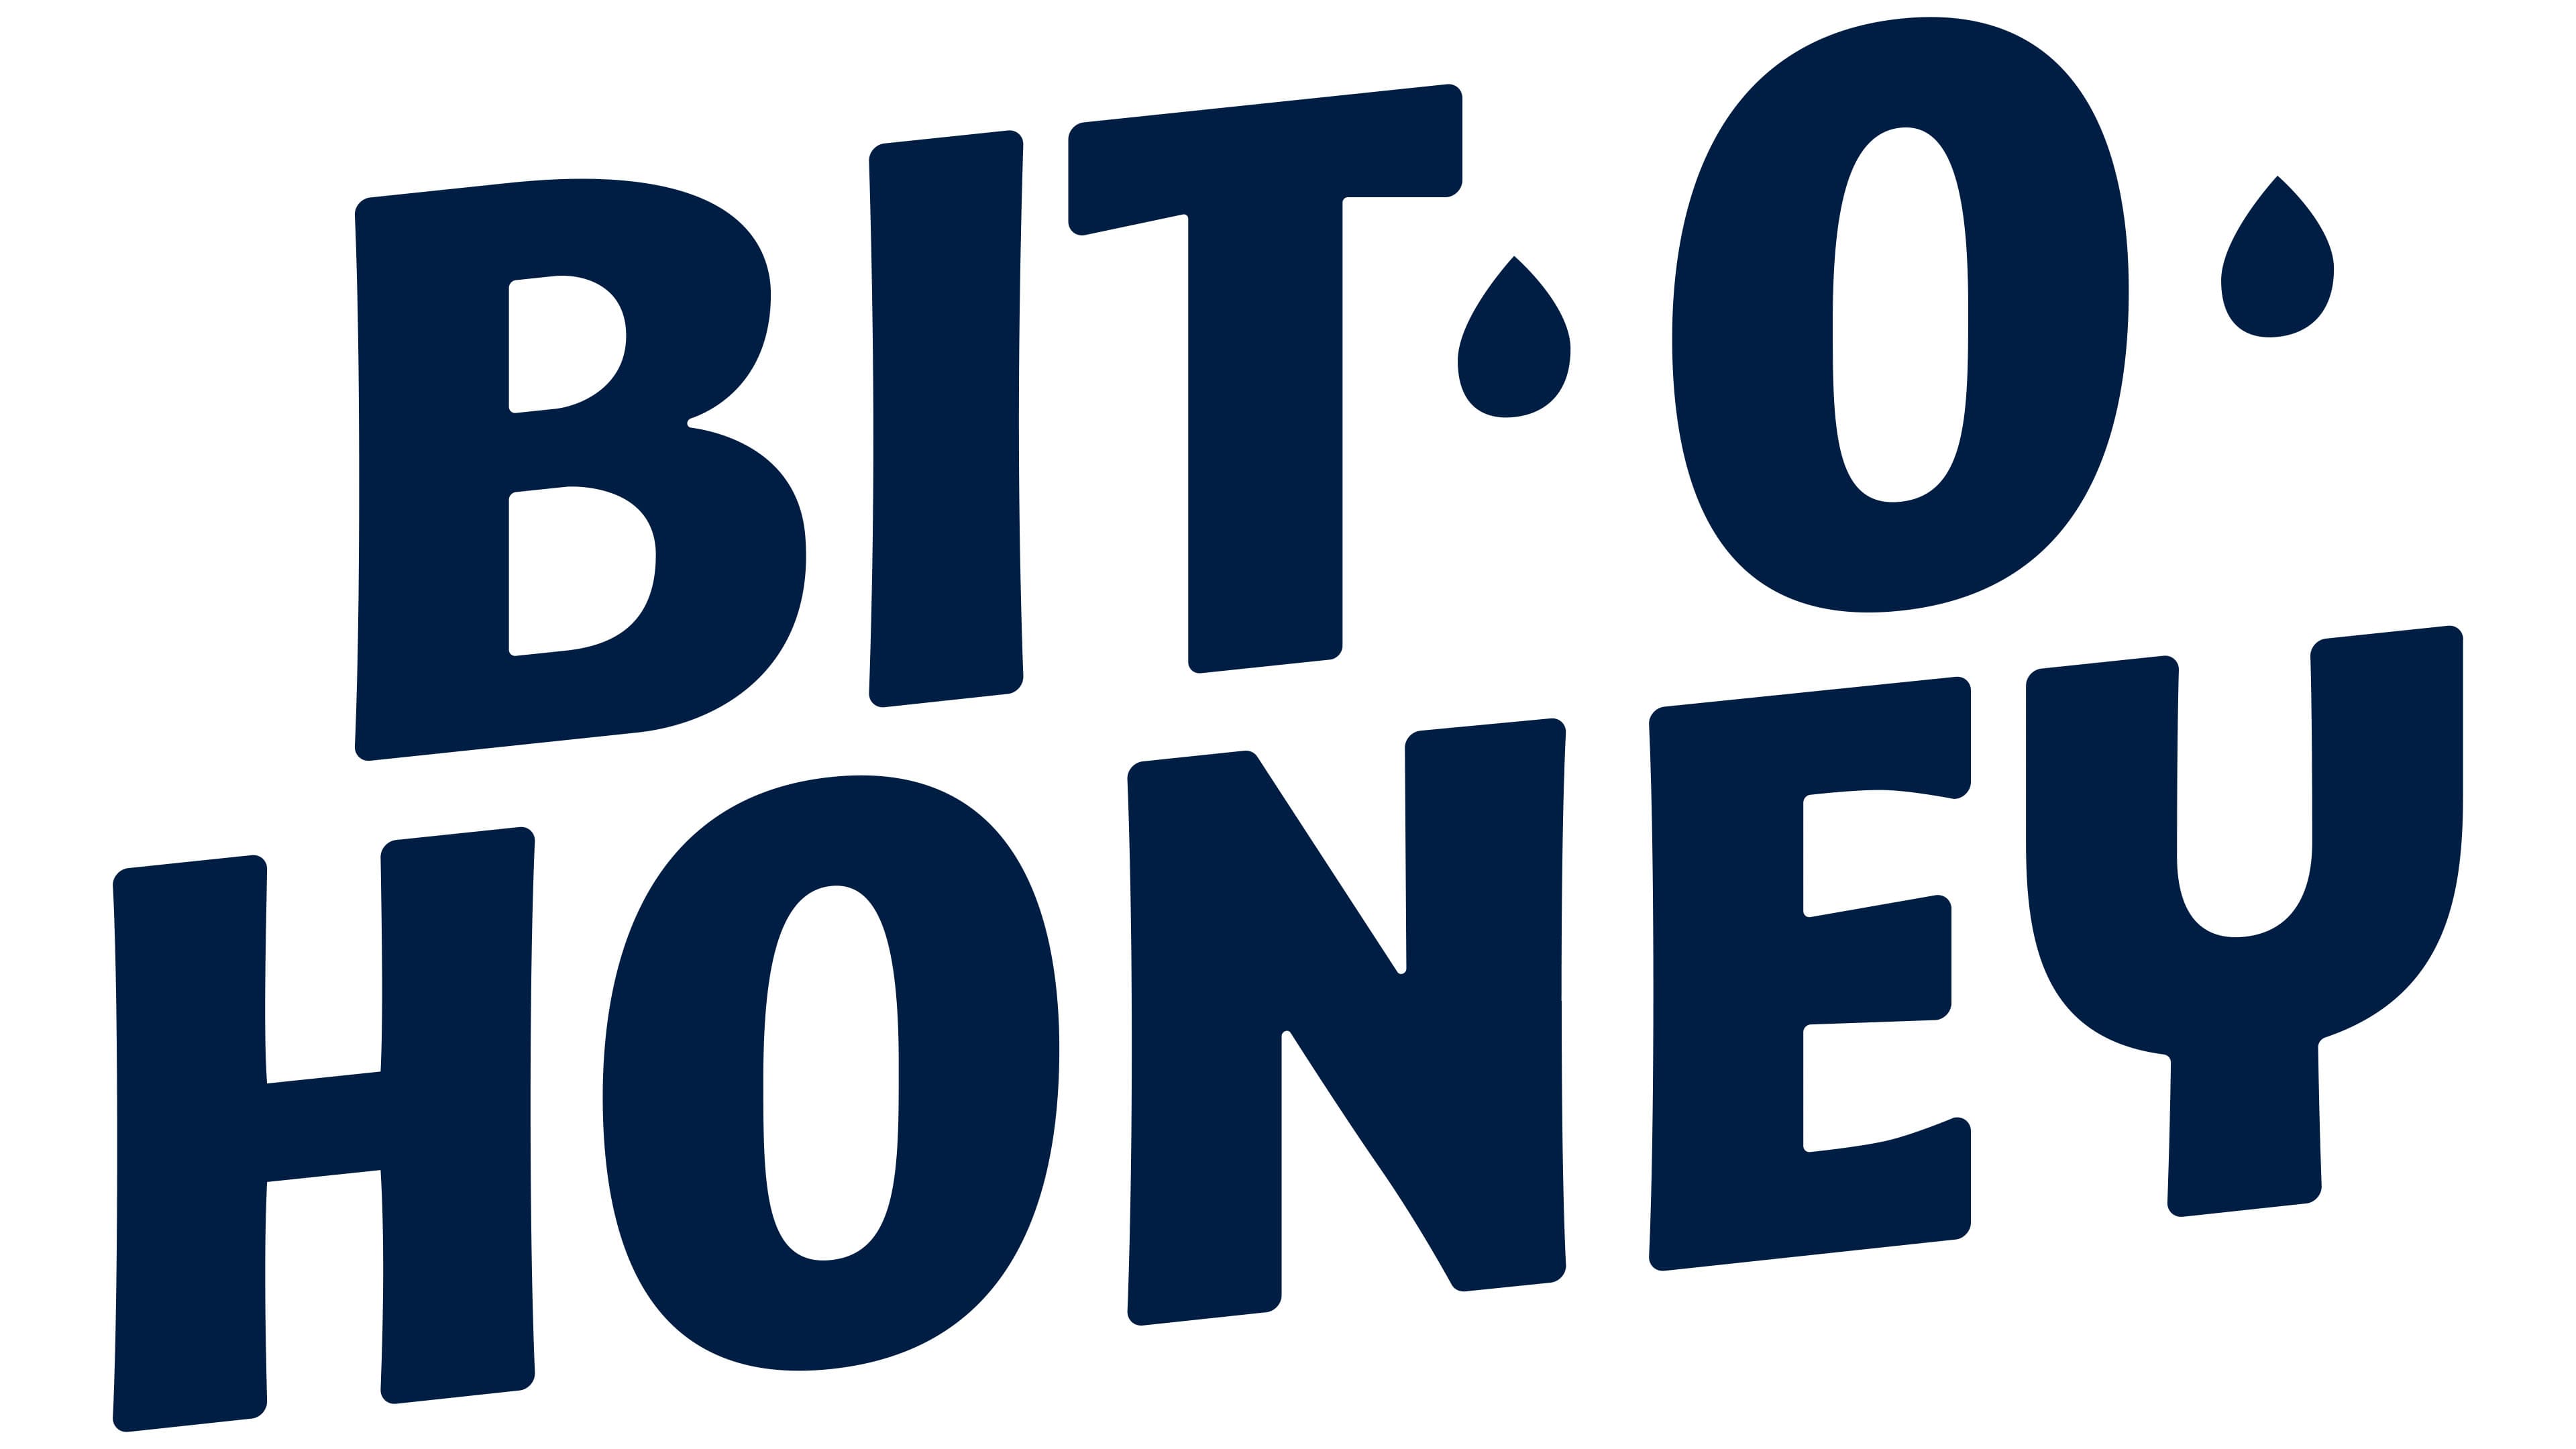 Bit-O-Honey Logo, symbol, meaning, history, PNG, brand